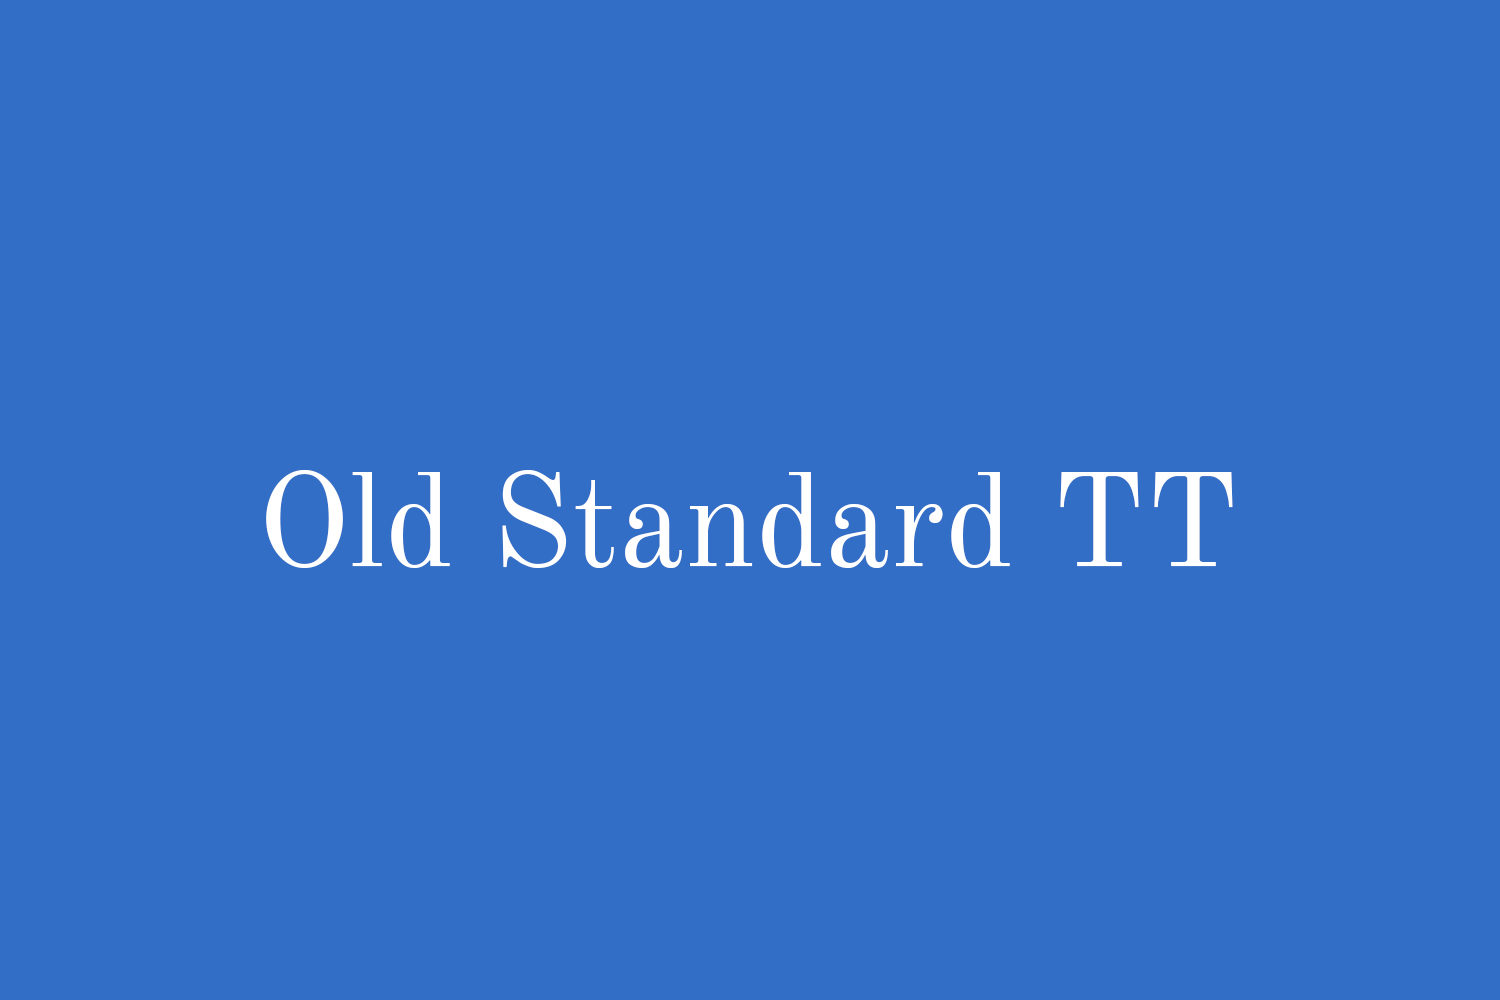 Old Standard TT